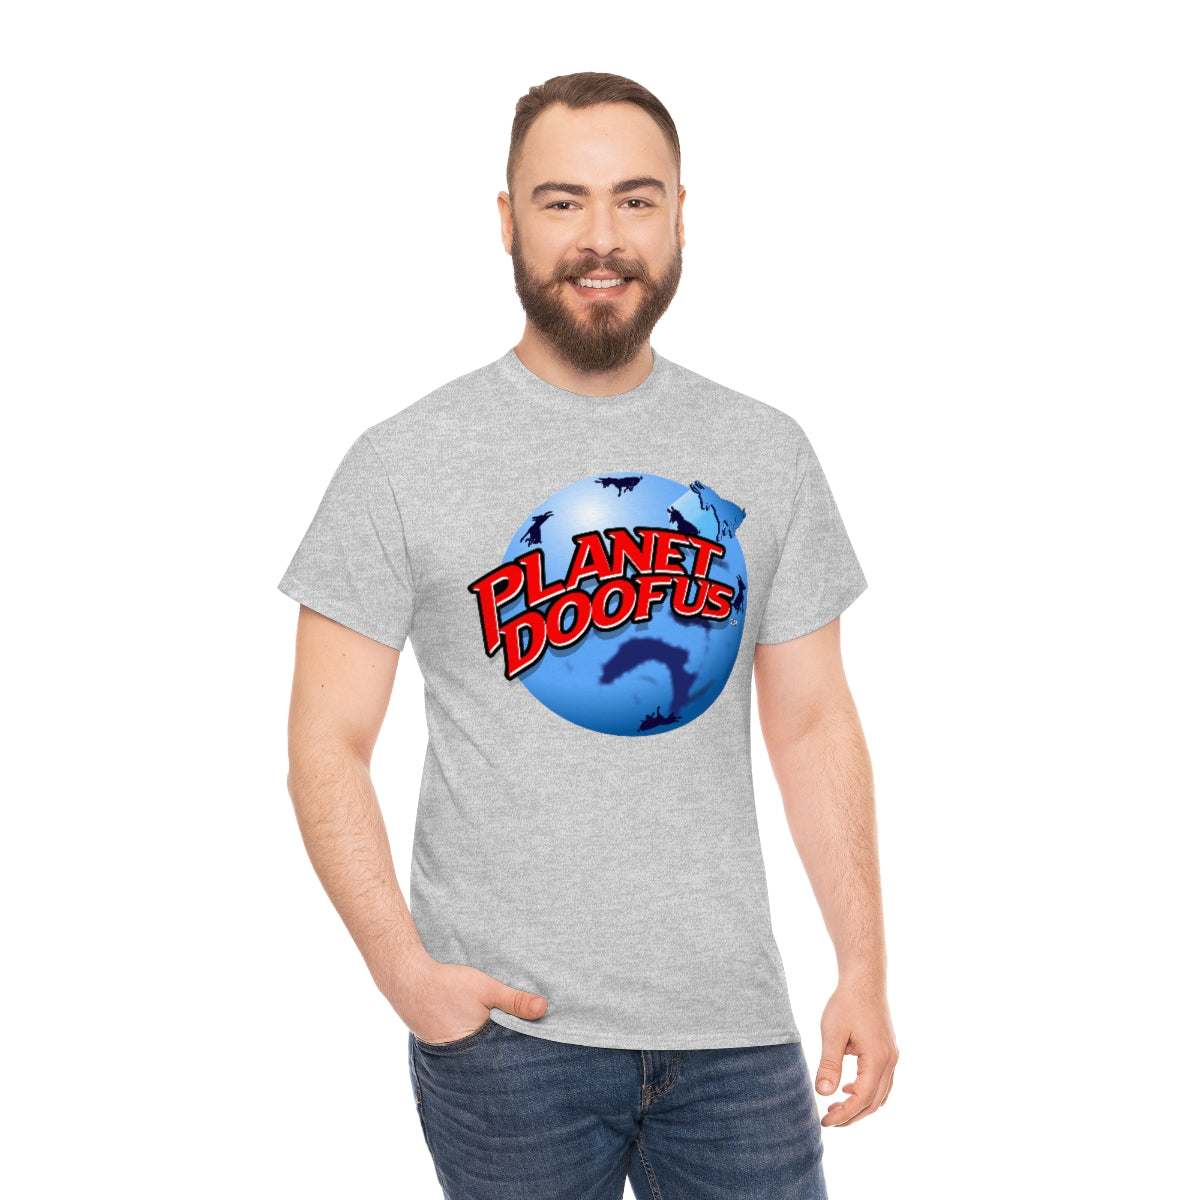 Planet Doofus Hollywood Unisex  Short Sleeve Tee Funny Gag Gift Funny Shirt